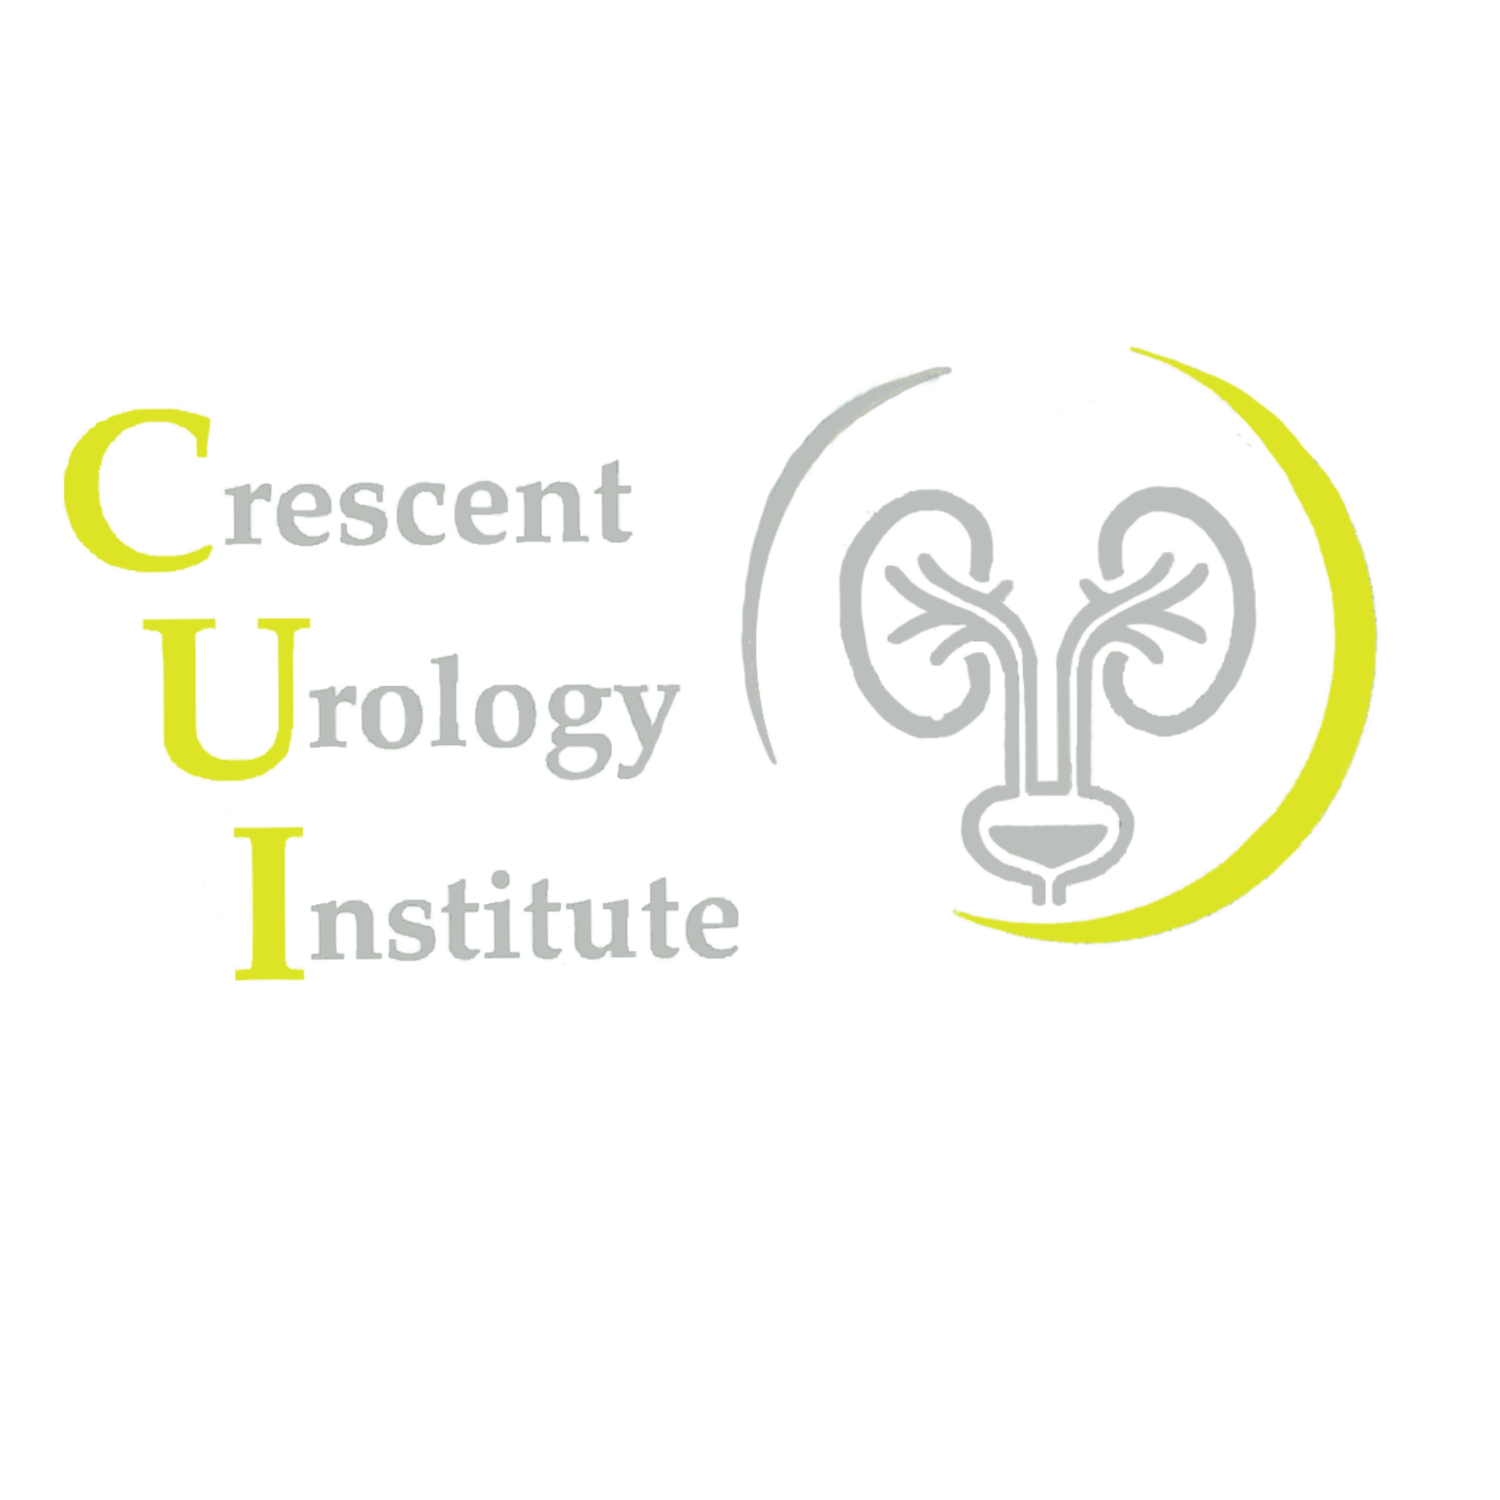 Crescent Urology Institute